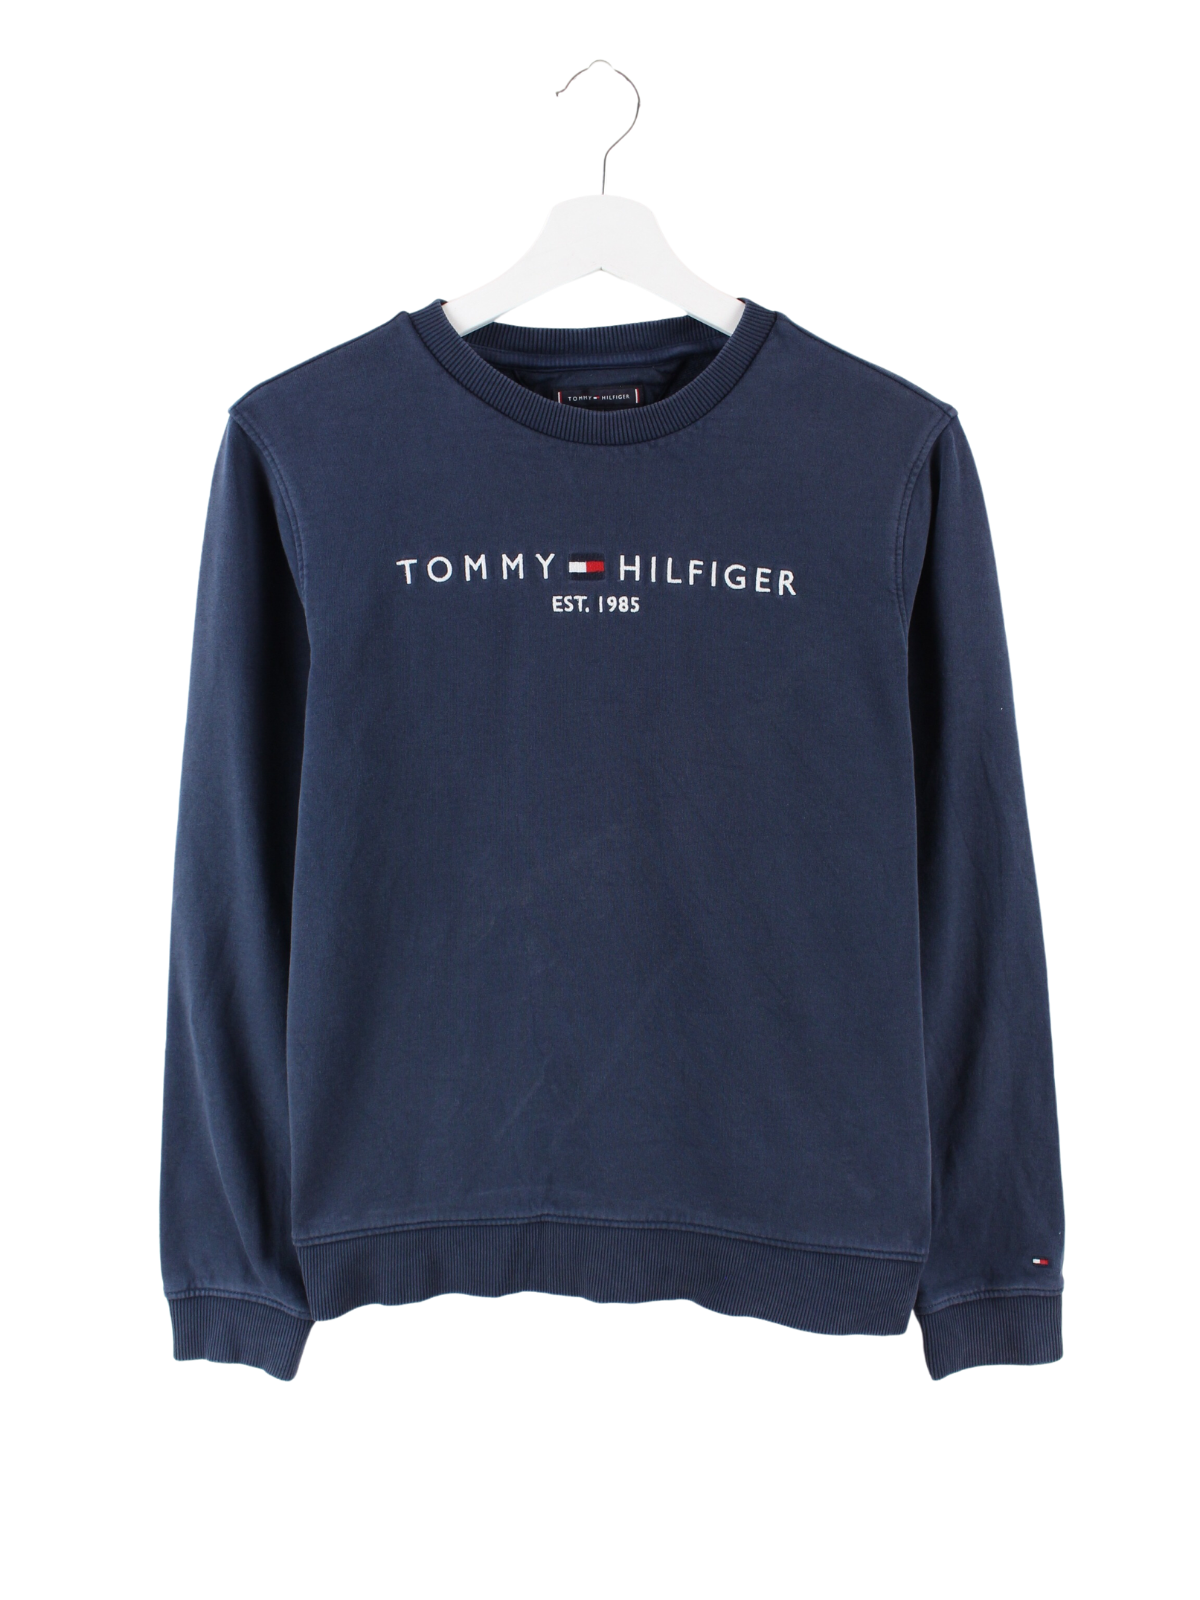 Tommy Hilfiger Damen Sweater Blau S